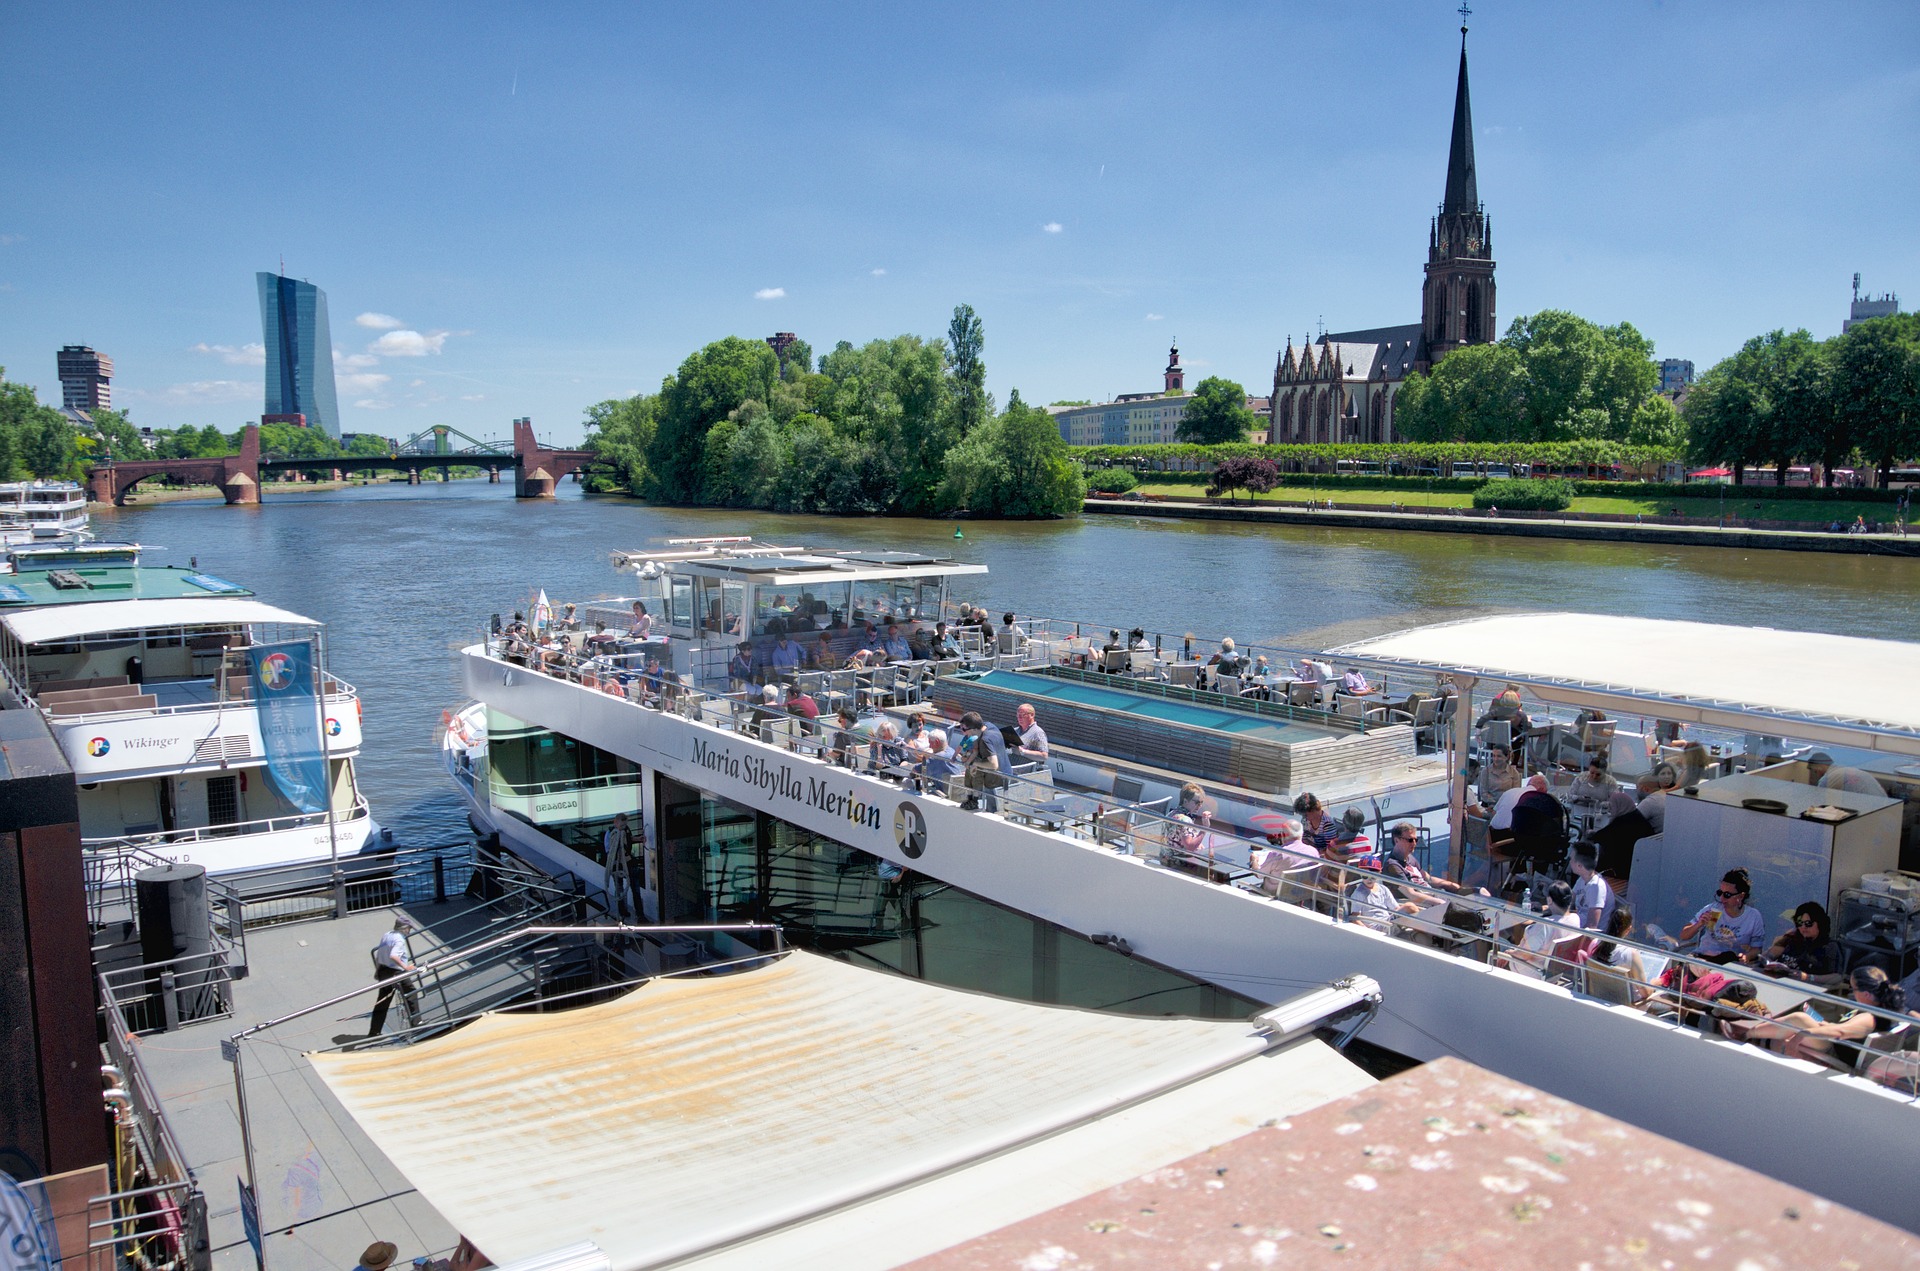 River boat with Dreikönigskirche church in background, Frankfurt, Germany